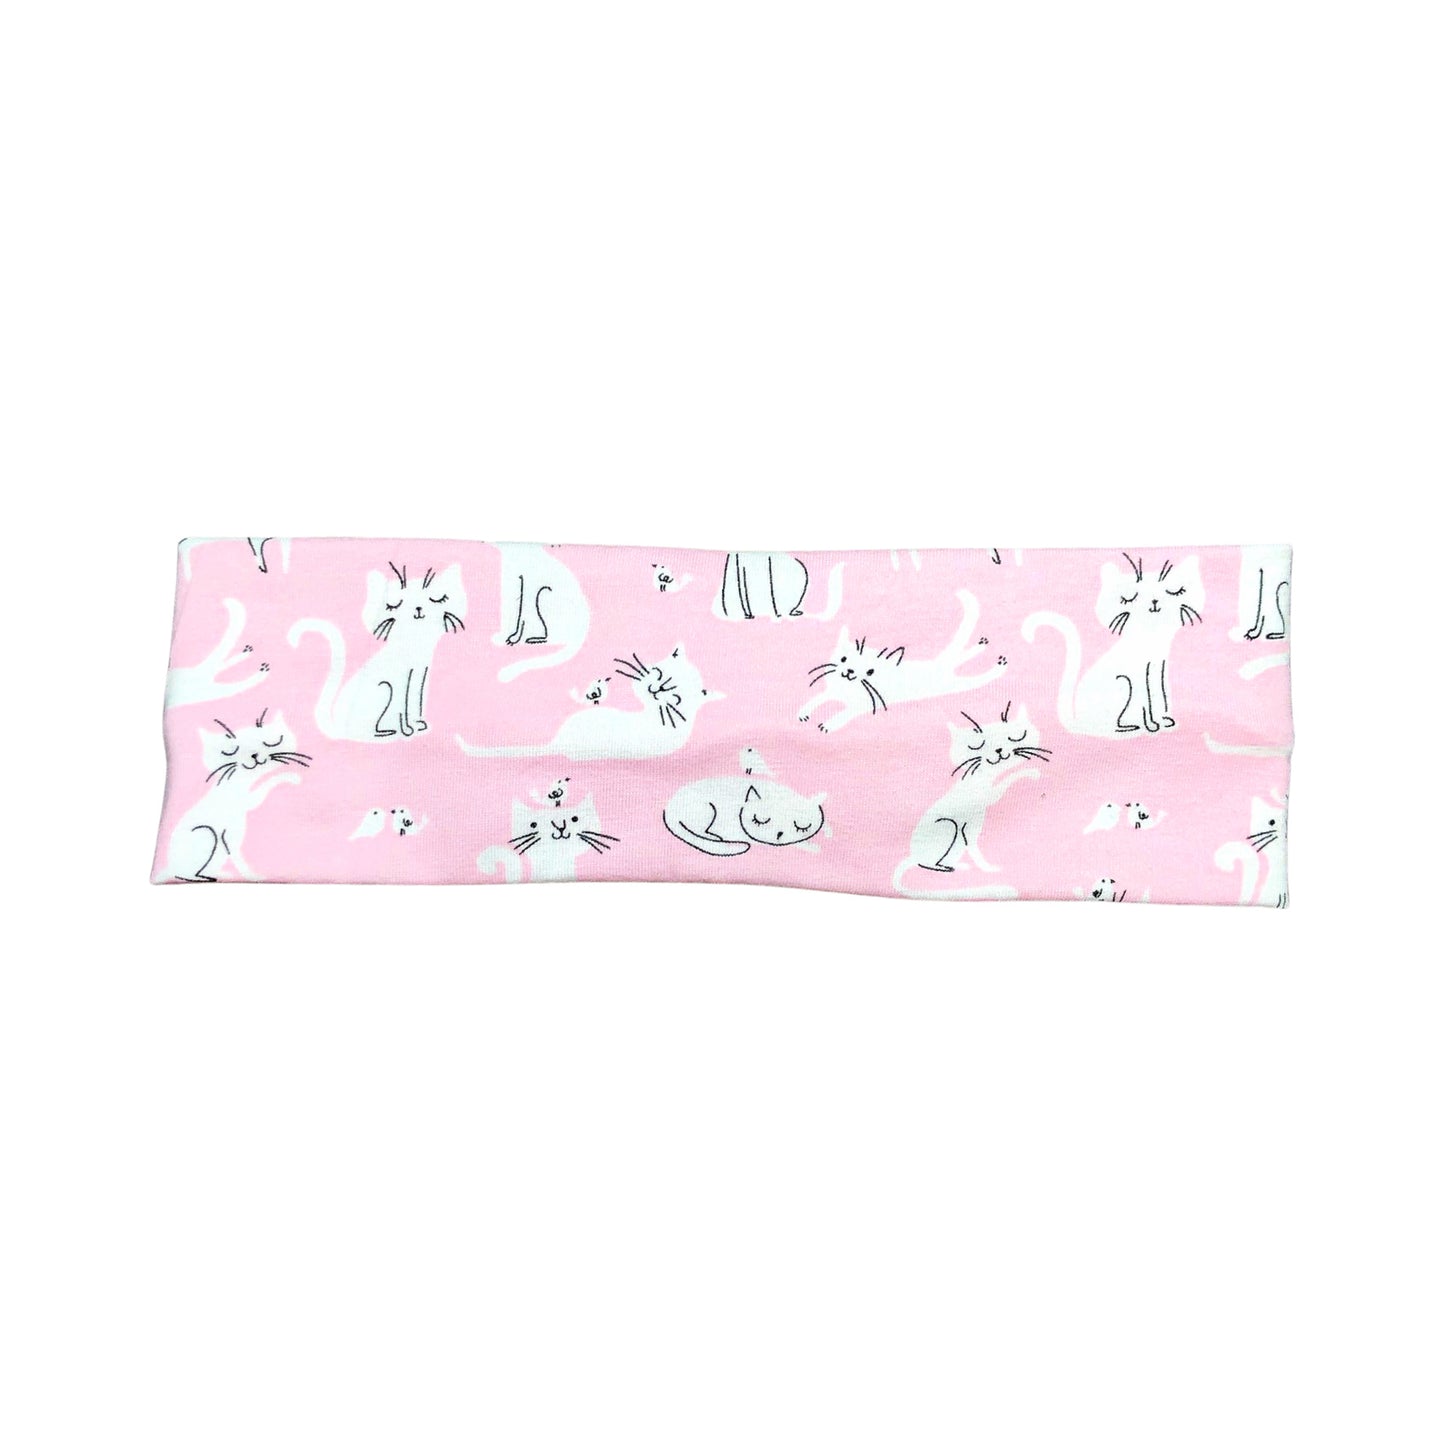 Pink Cats Fabric Headband for Women